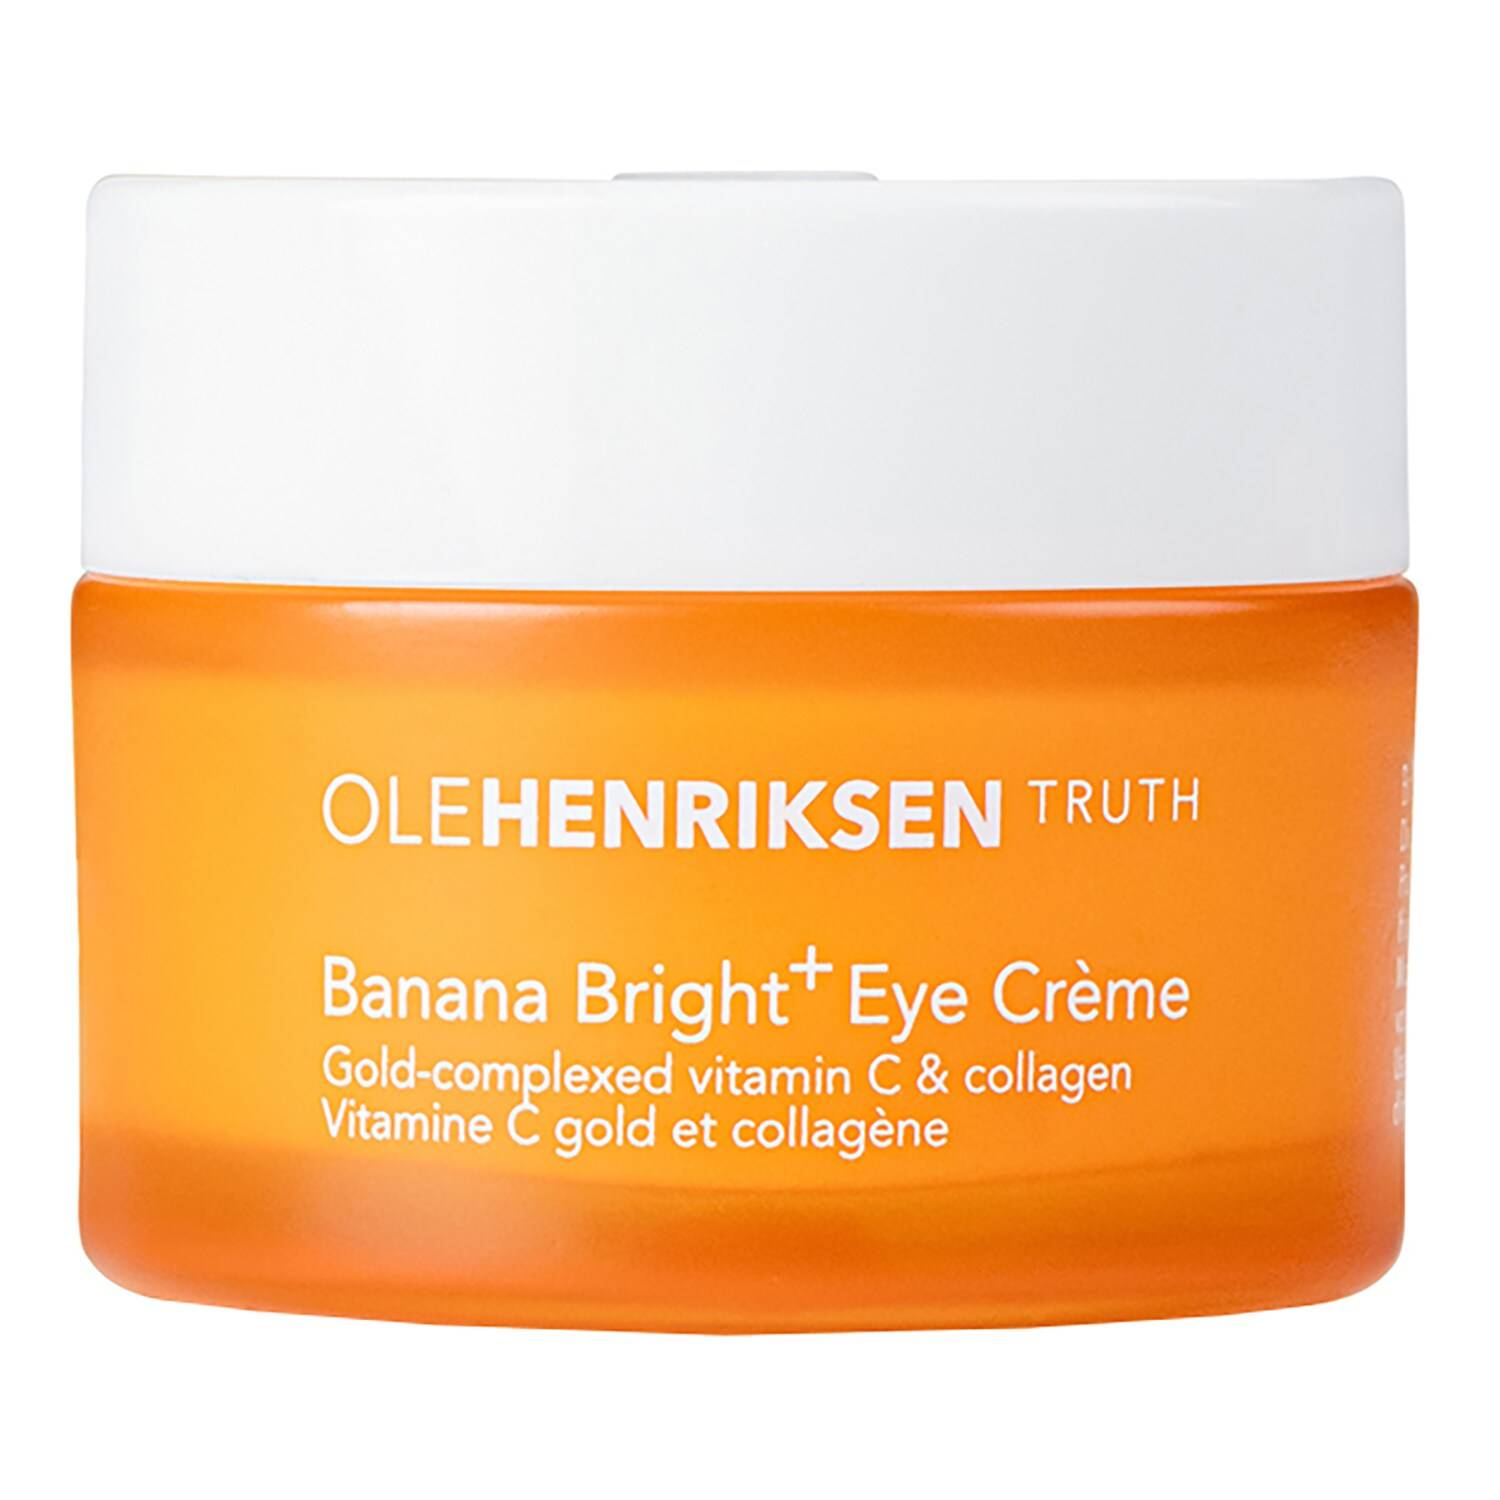 Ole Henriksen Banana Bright + Eye Creme 15Ml